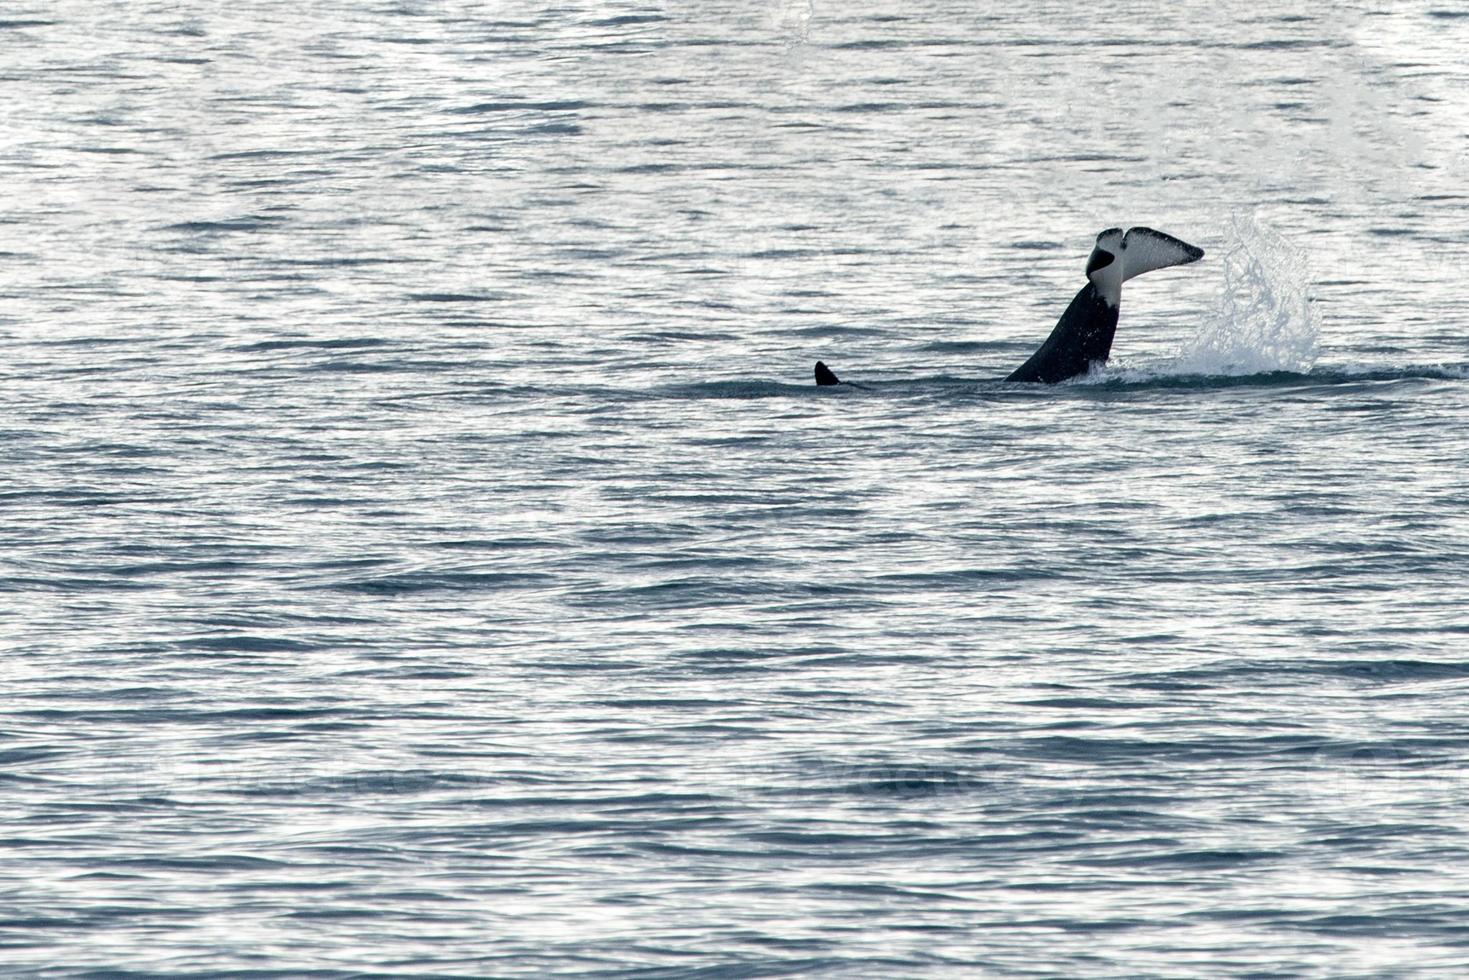 Orca Tail slapping in mediterranean sea photo